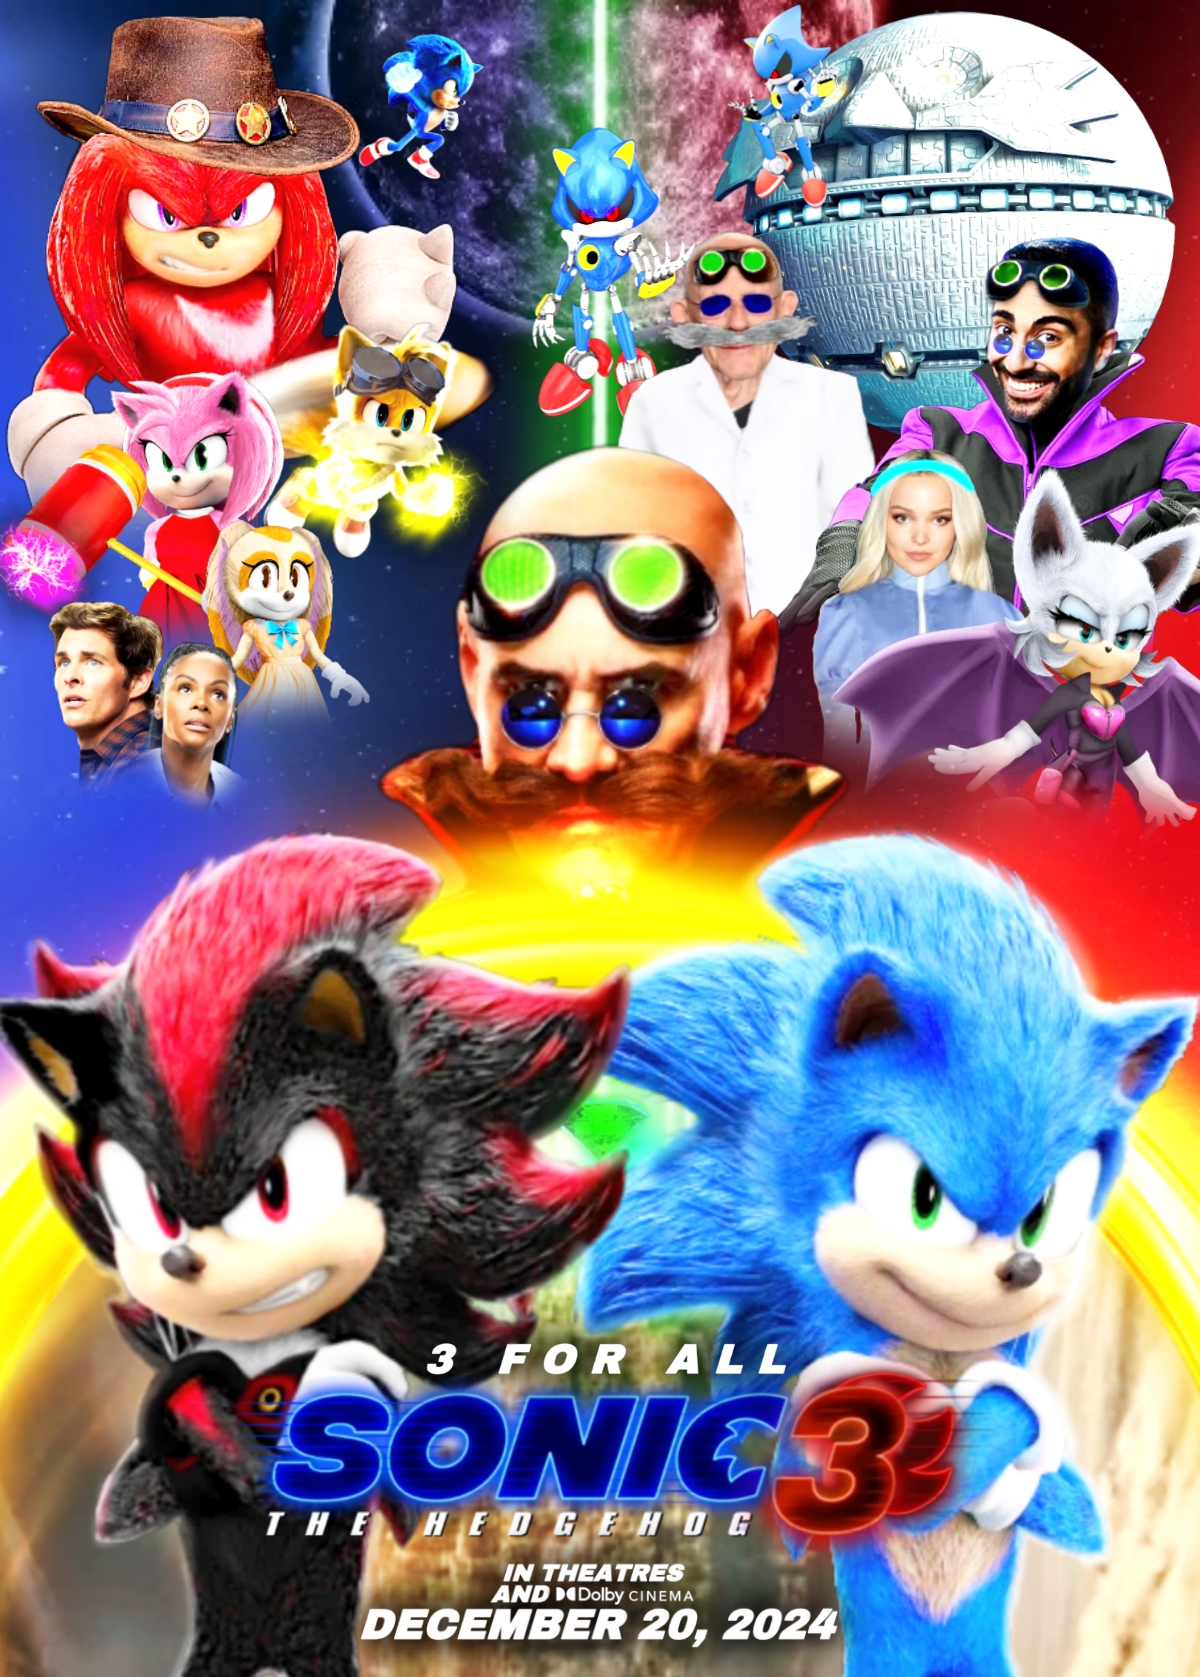 Sonic 3 Poster by NoisyBoiii on DeviantArt